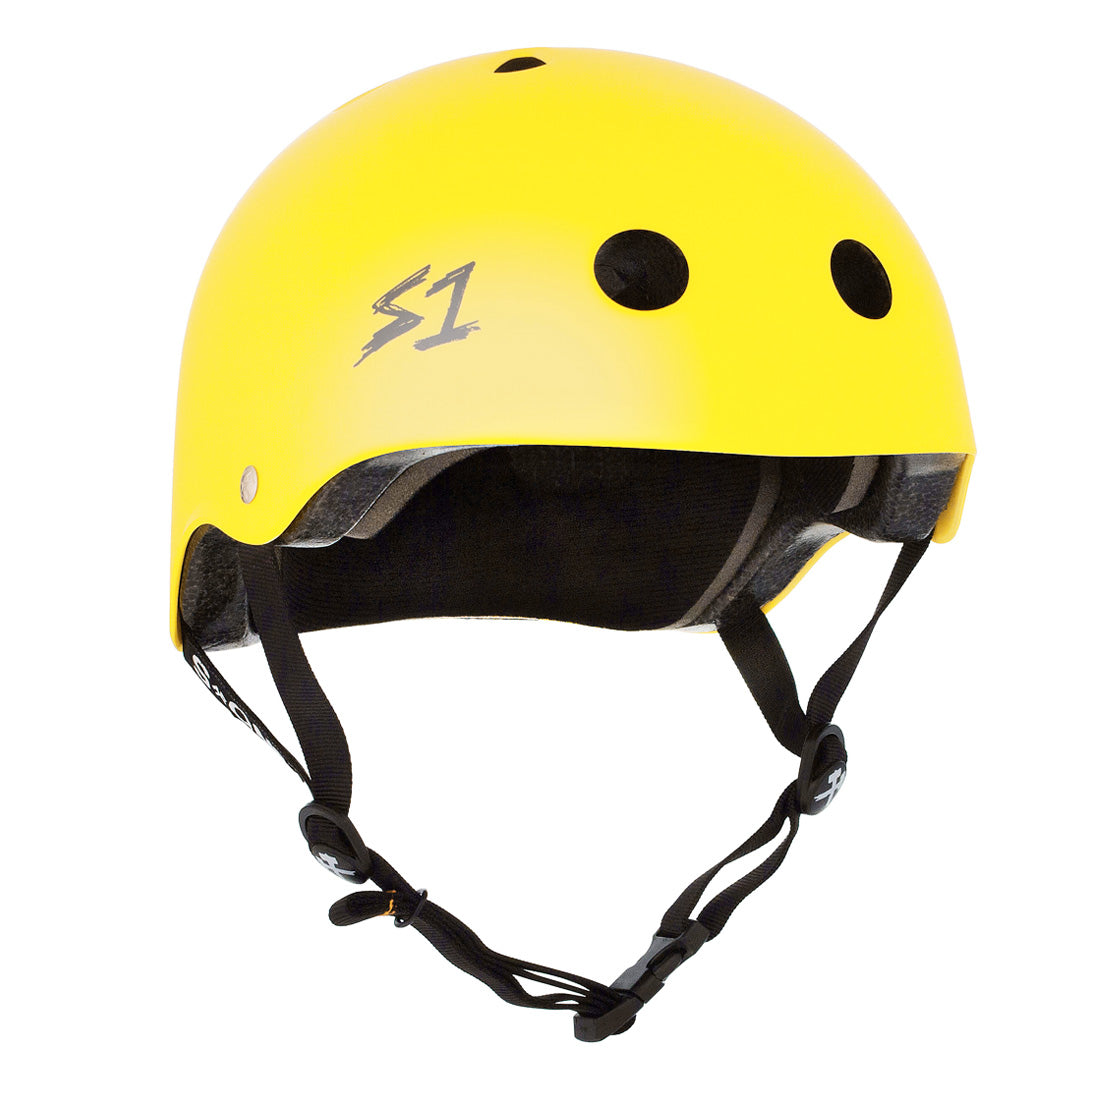 S-One Lifer Helmet - Yellow Matte Helmets